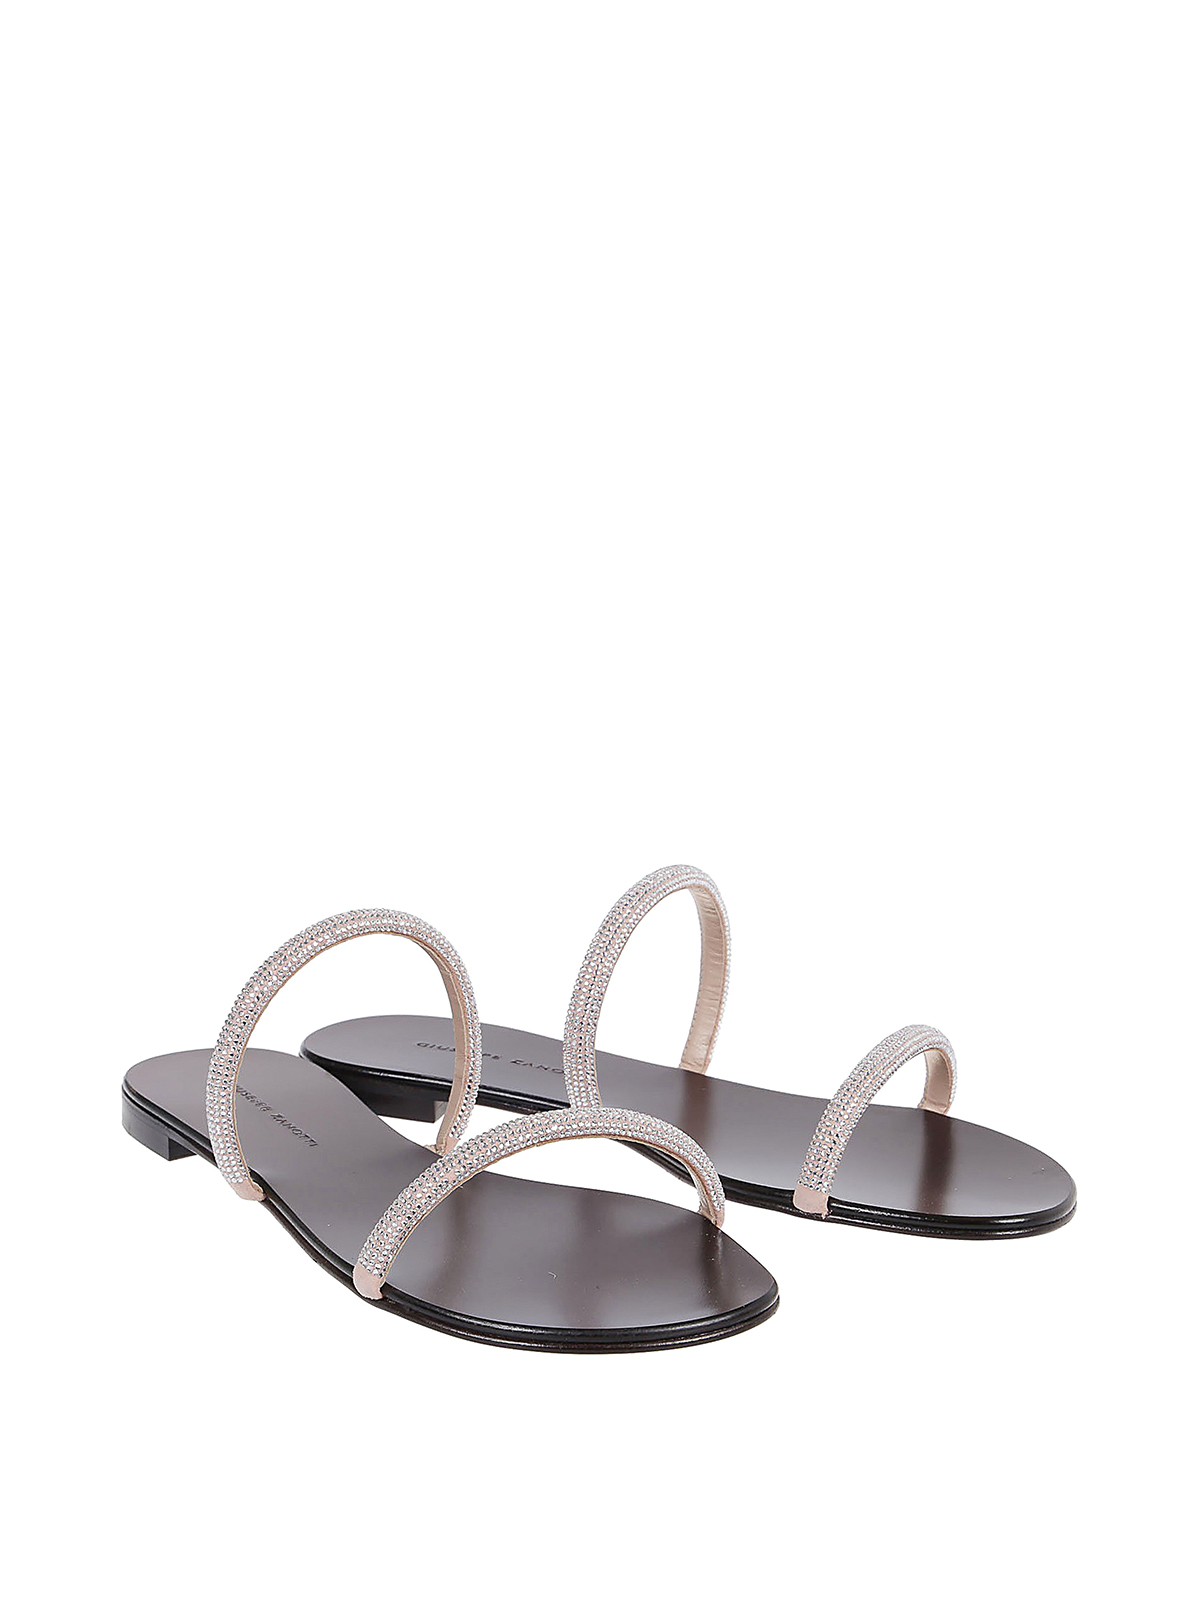 Sandals Giuseppe Zanotti - Crystal leather sandals